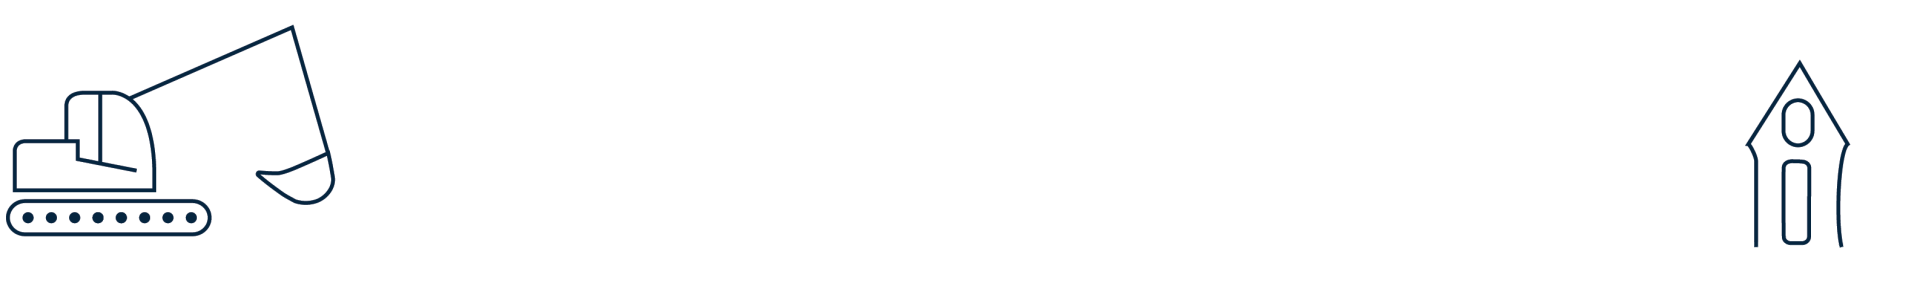 Capital Water Works logo